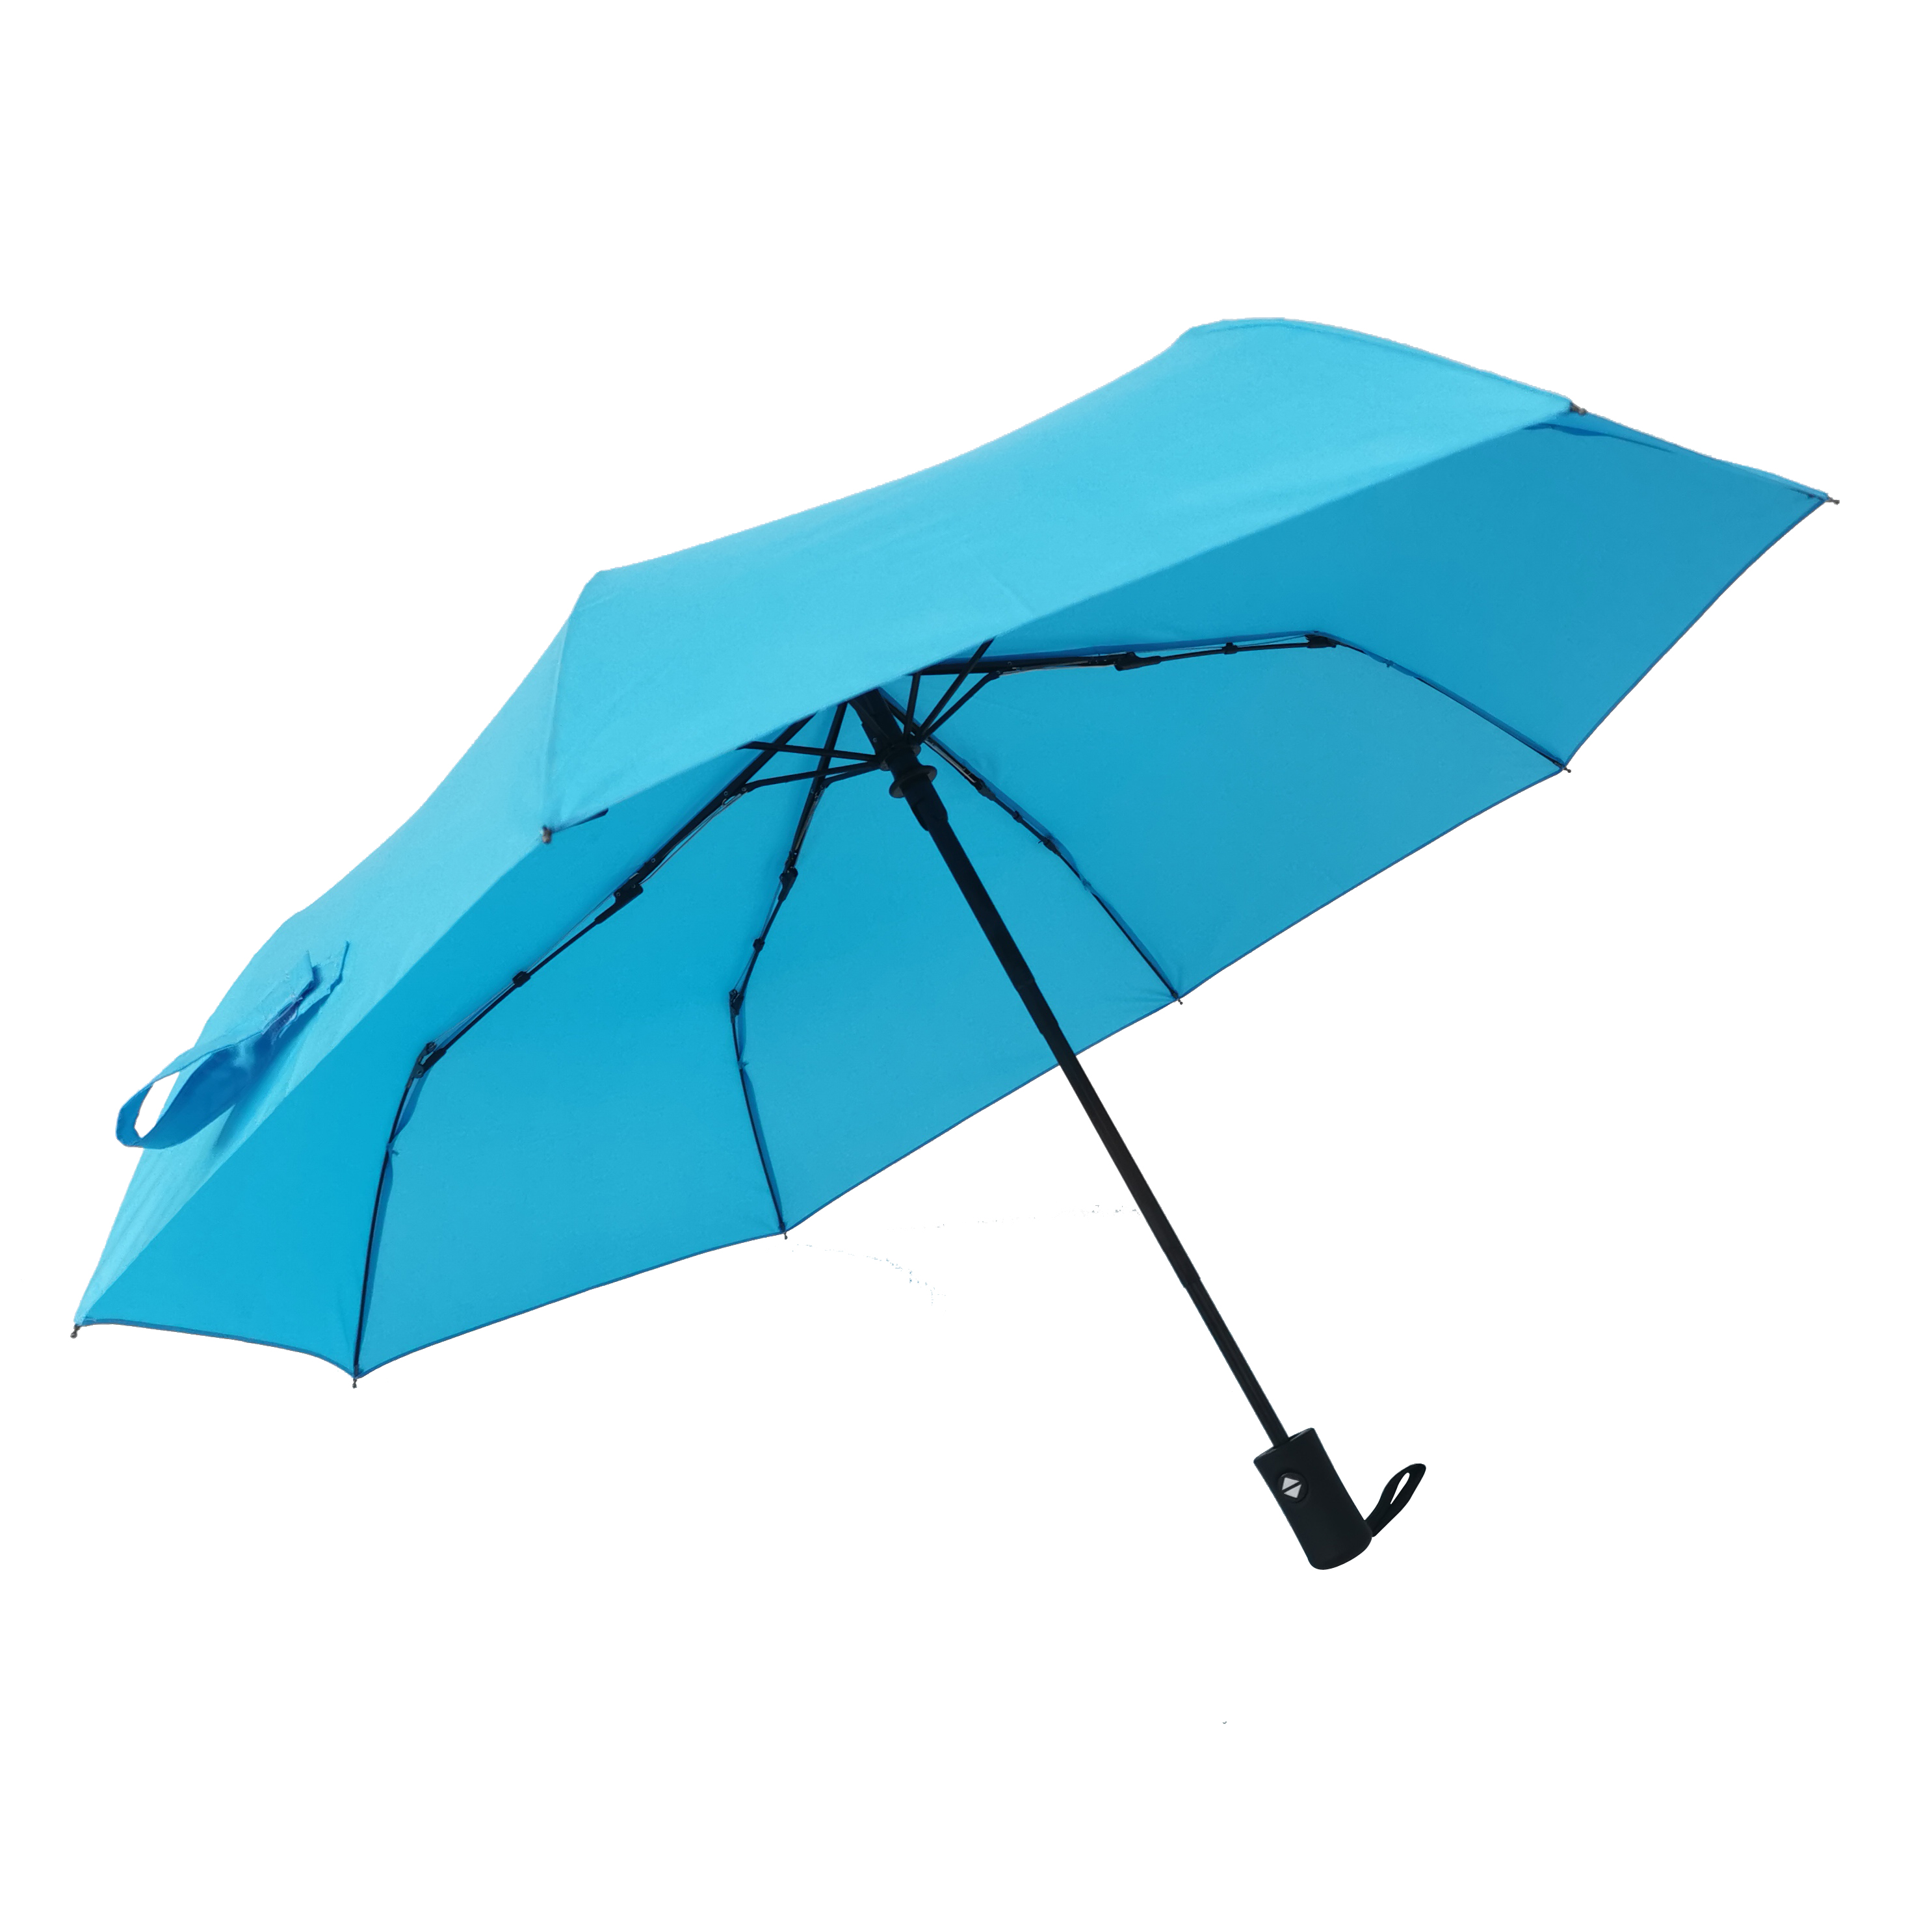 https://www.hodaumbrella.com/21-customization- fully-automatic-3-folding-sunrain-umbrella-for-adult-polyester-pongee-plastic-handle-6k-8k-product/